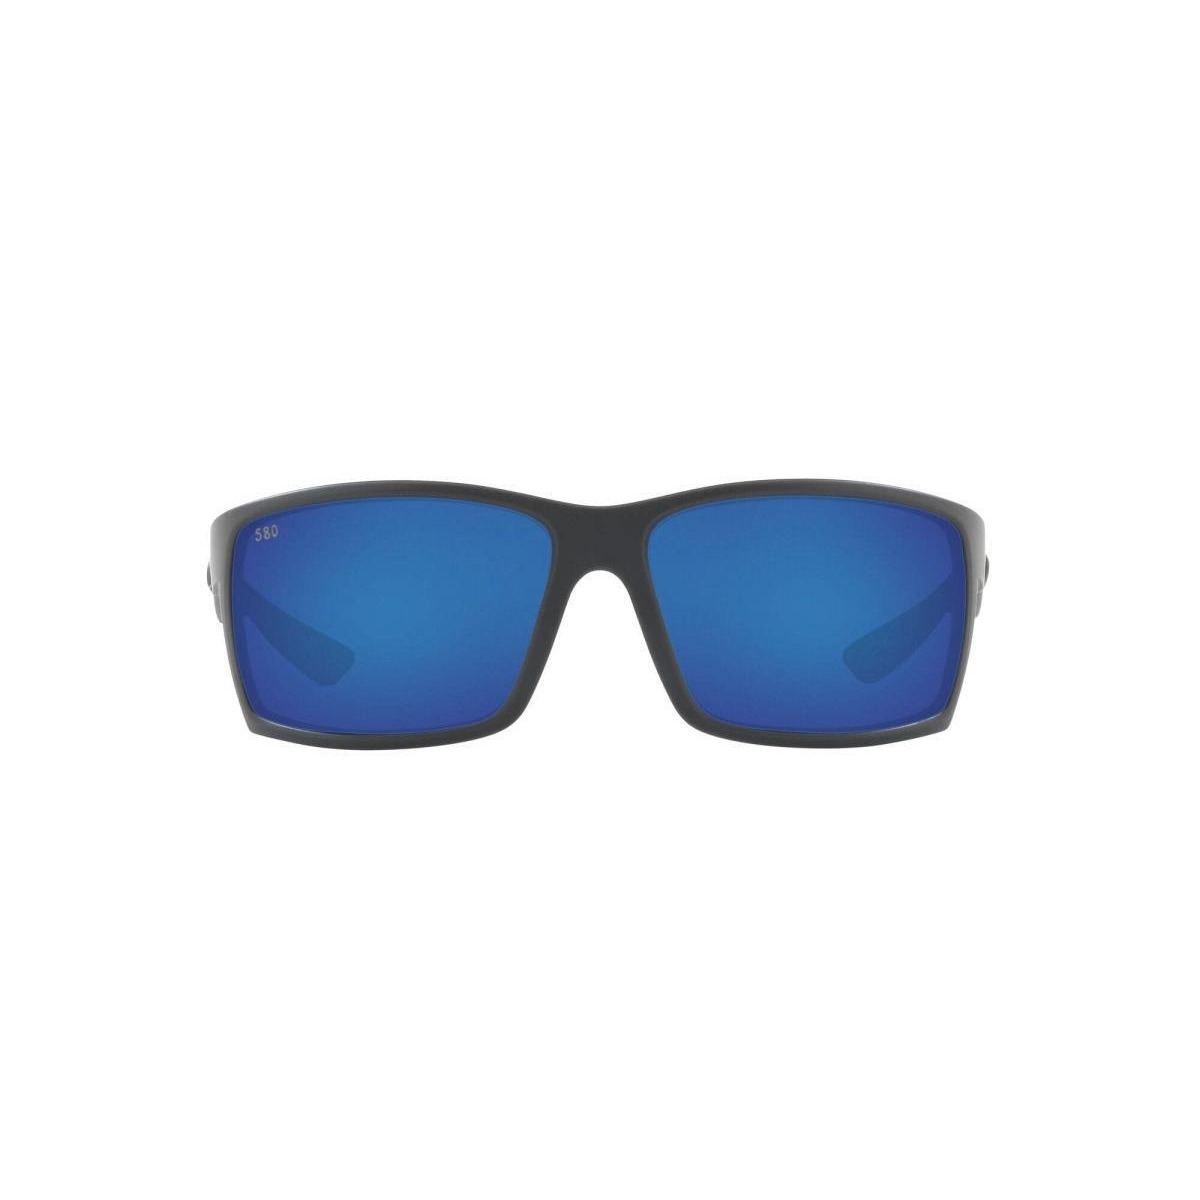 Costa Del Mar 06S9007-90073364 64 mm Reefton Rectangular Sunglasses for Mens, Gray & Blue Polarized